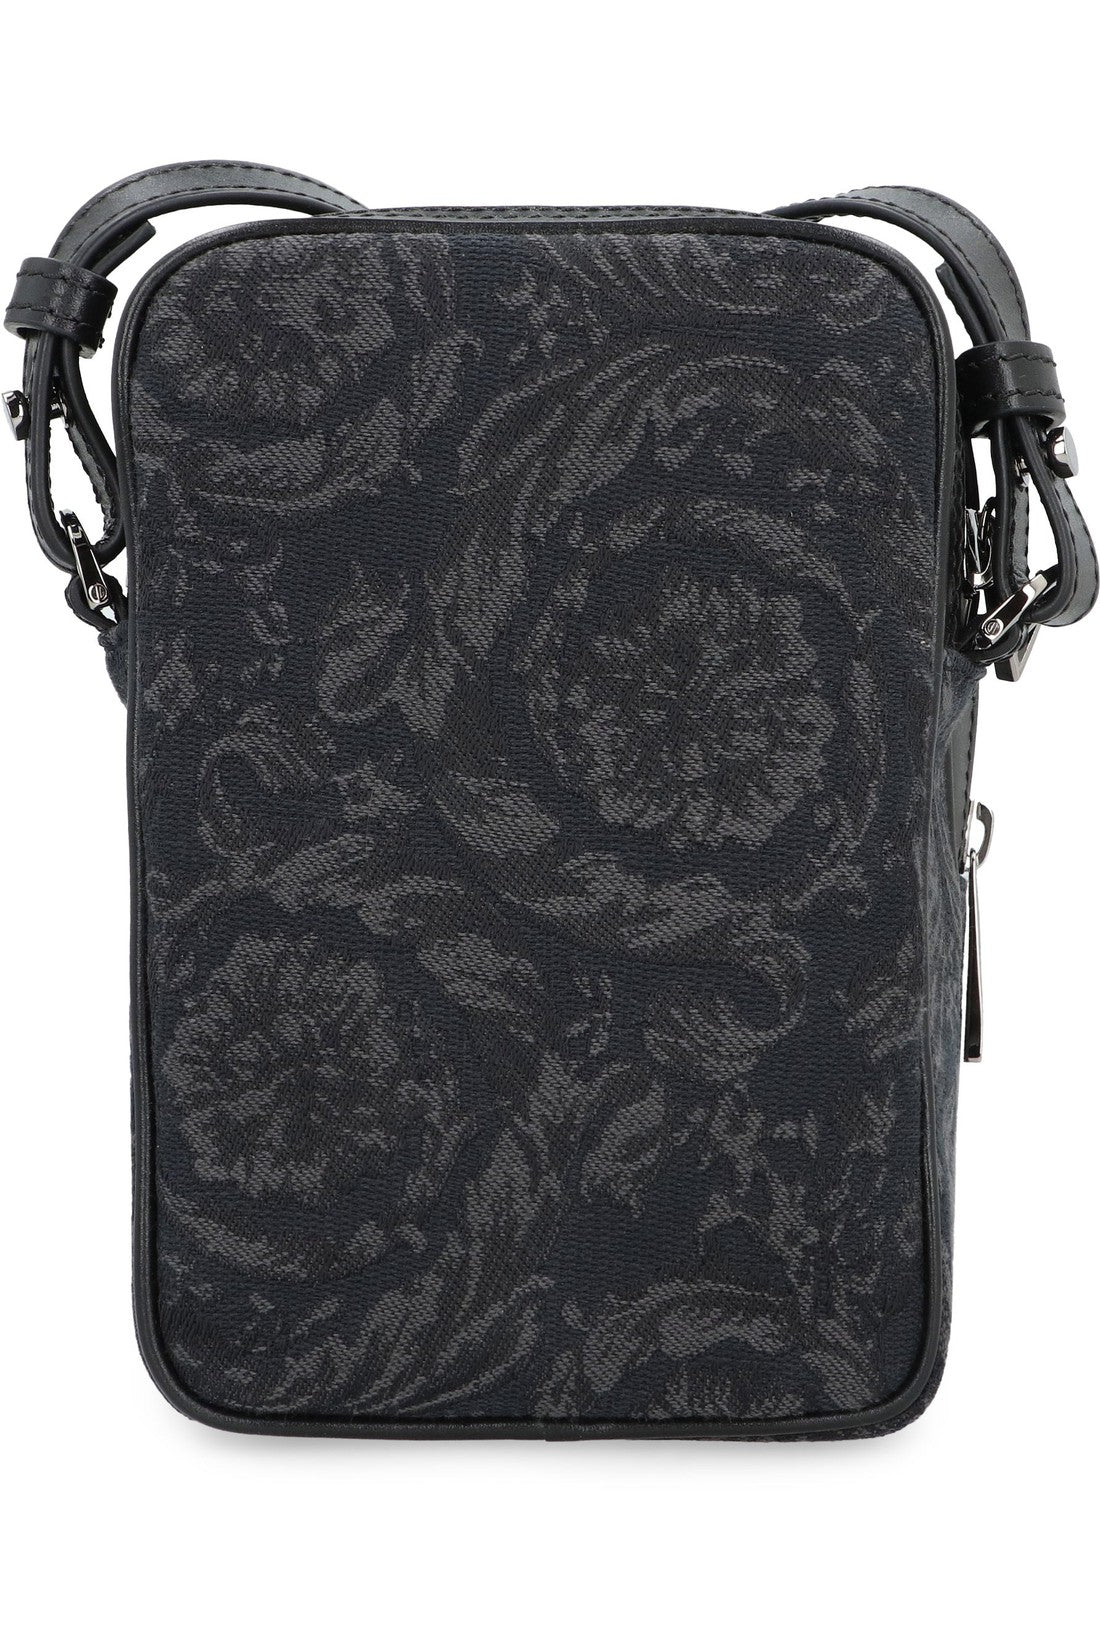 Versace-OUTLET-SALE-Athena Crossbody bag-ARCHIVIST